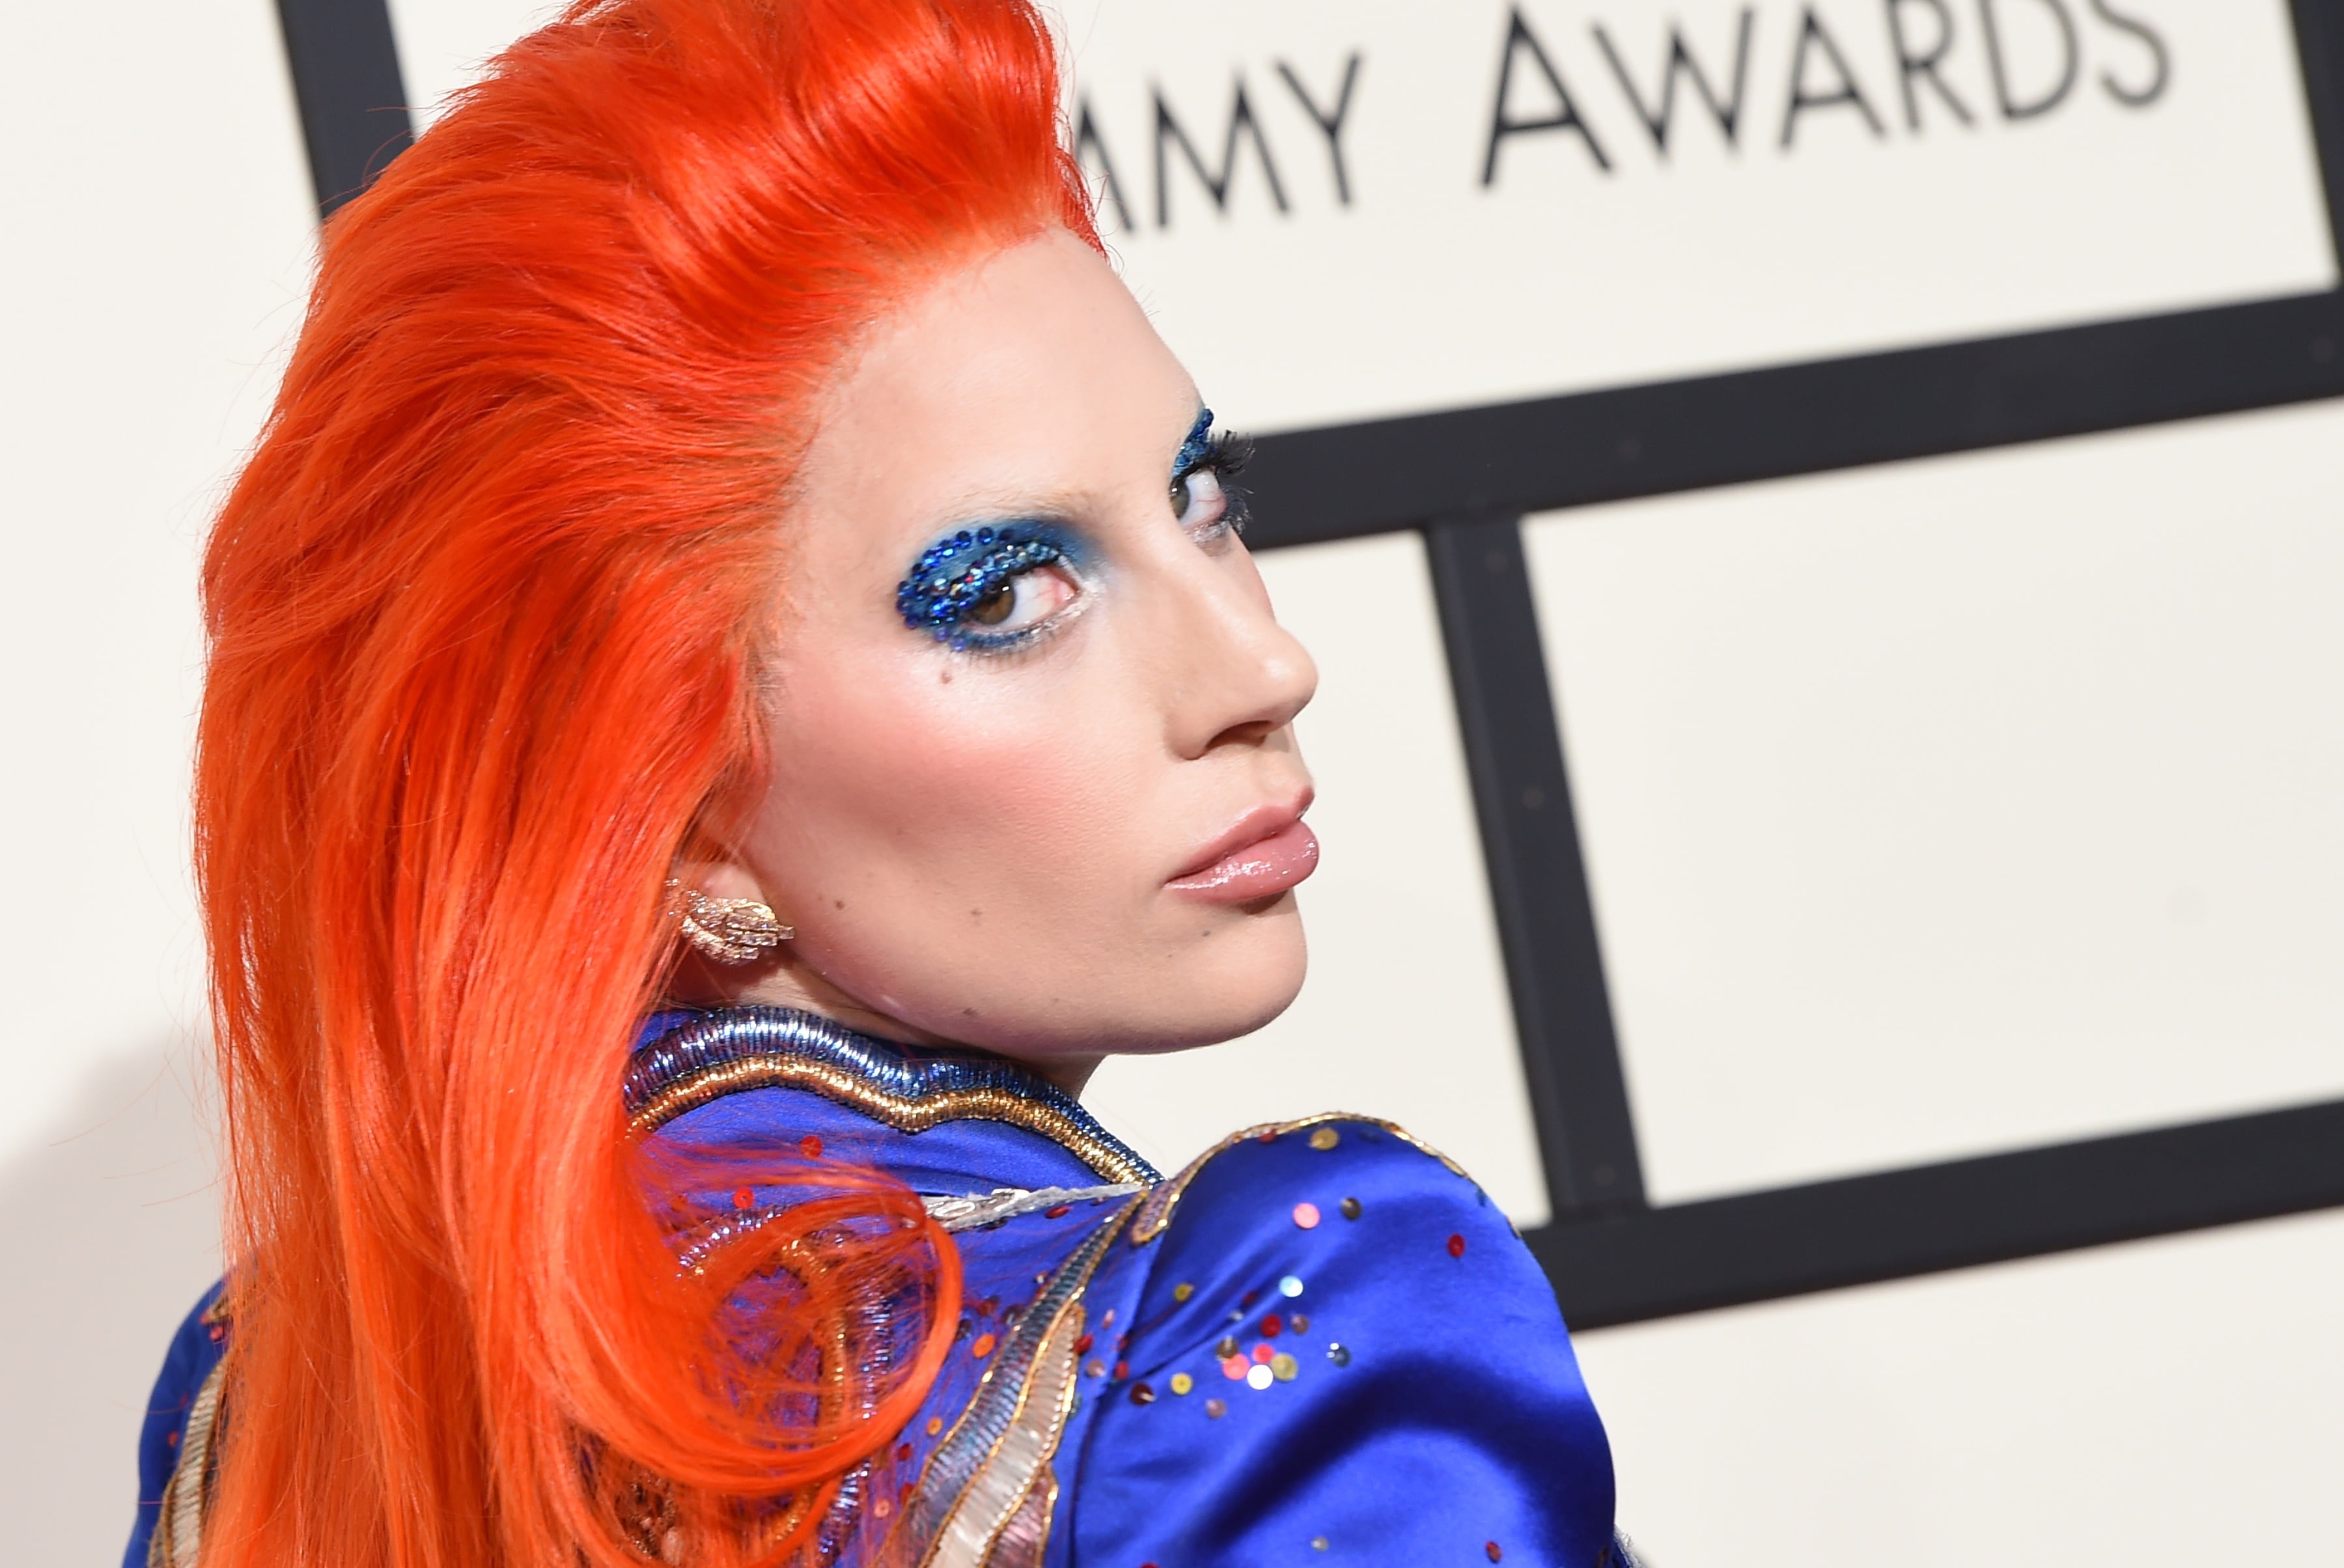 Lady Gaga Skincare Routine and Beauty Secrets - The Skincare Edit